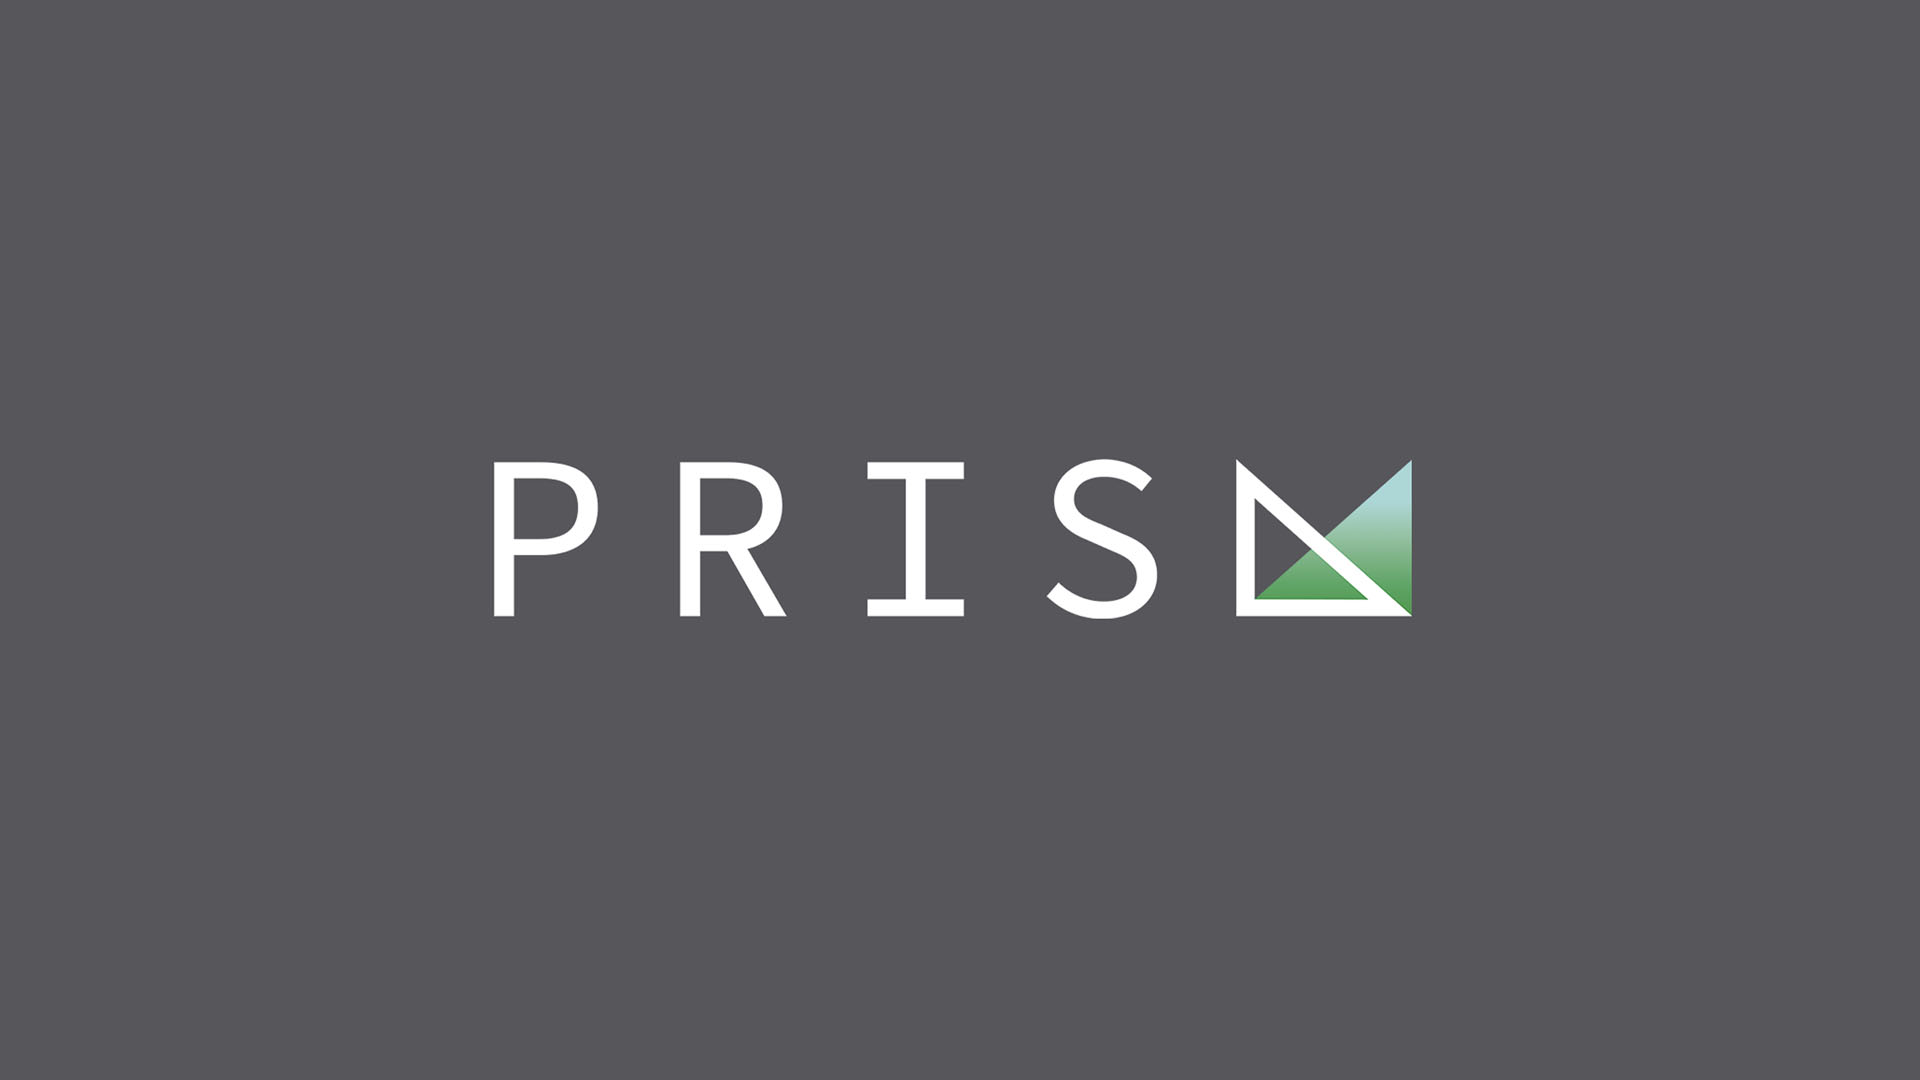 prism apartments logo on gray